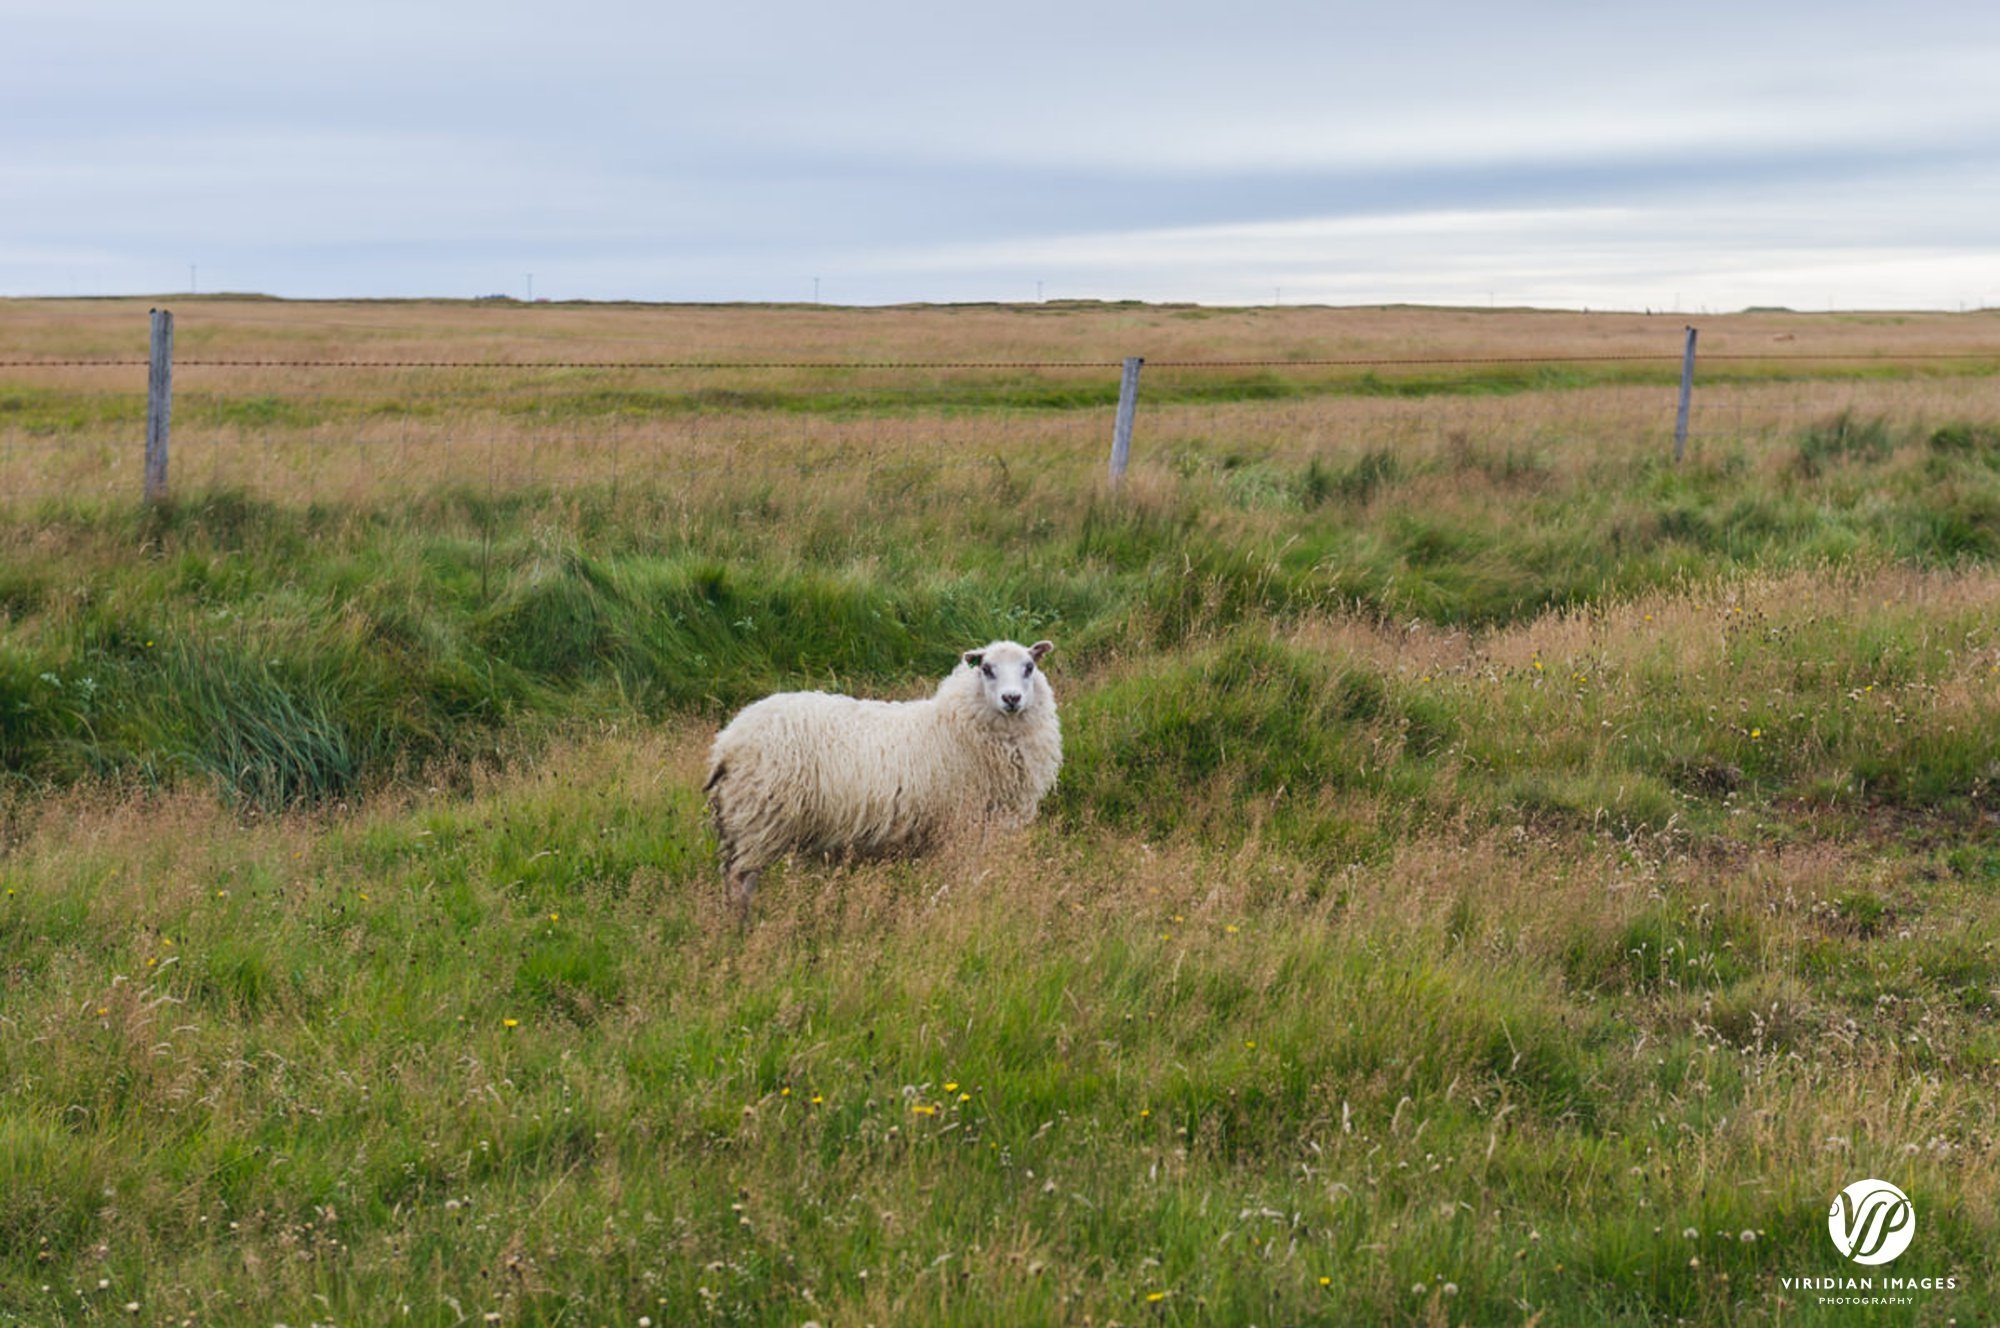 Icelandic Sheep grazing in field in Iceland